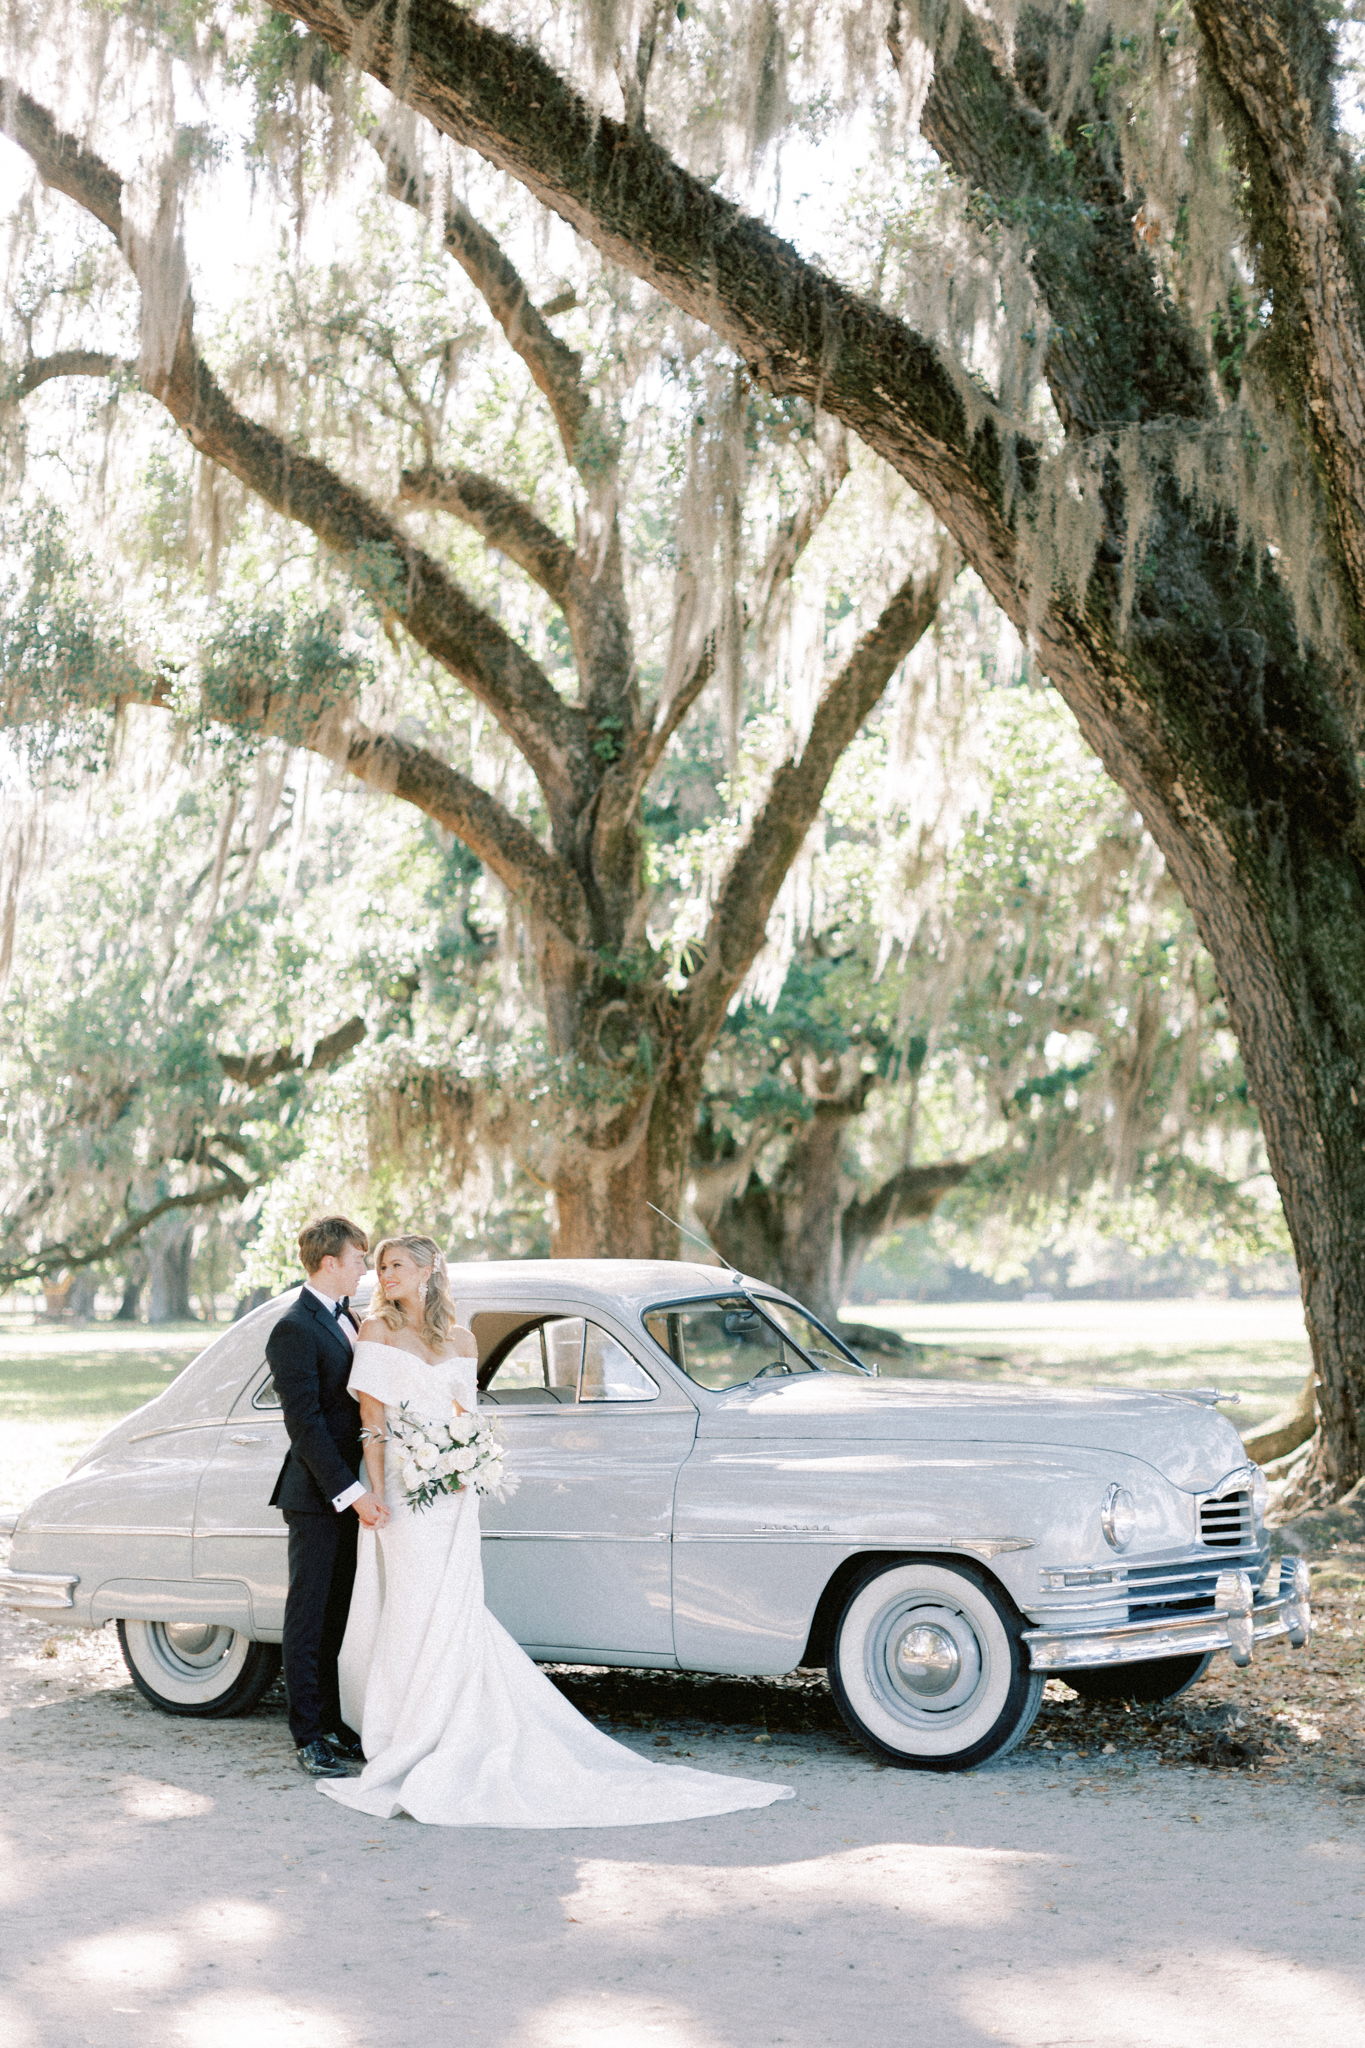 Lindsay + Jake  Wedding at Middleton Place, Charleston SC